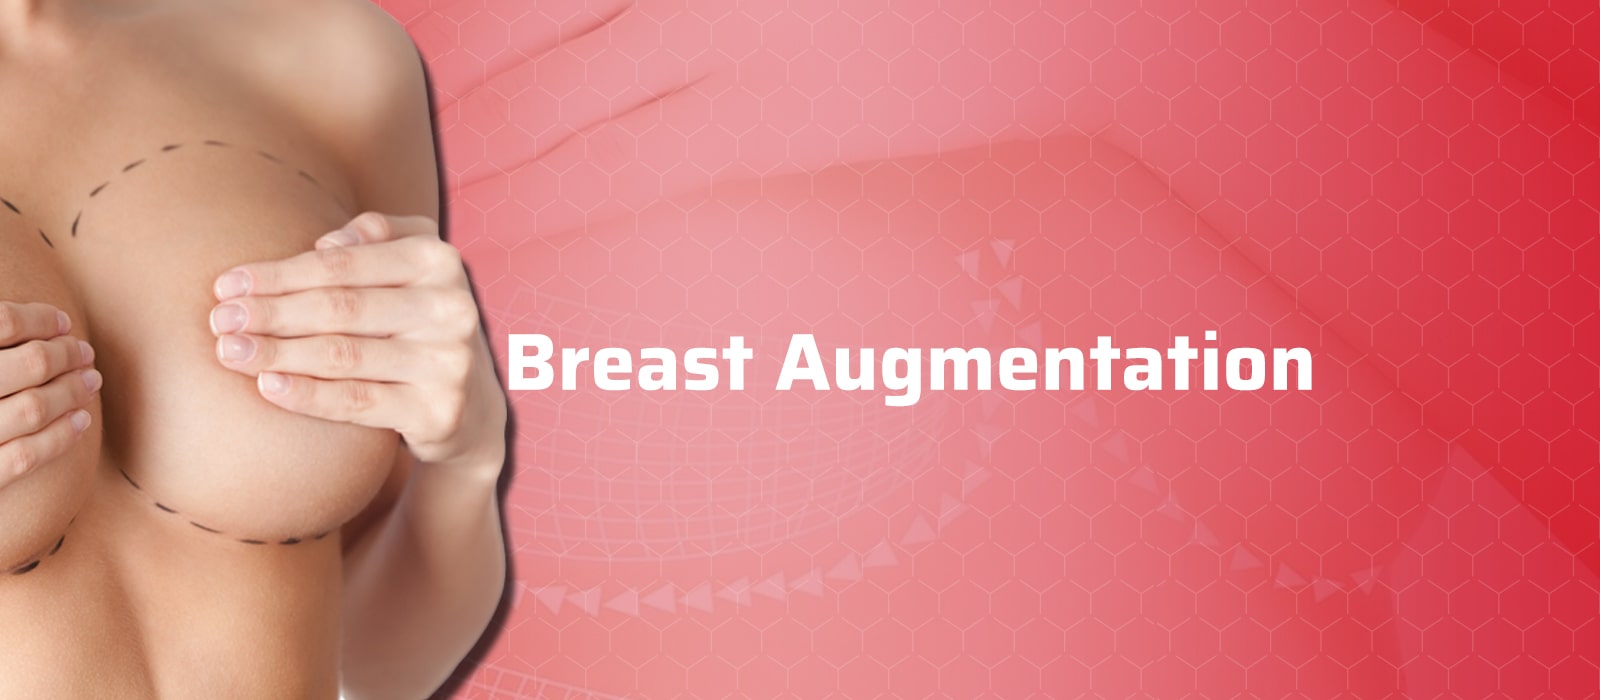 Breast Augmentation (Enlargement)